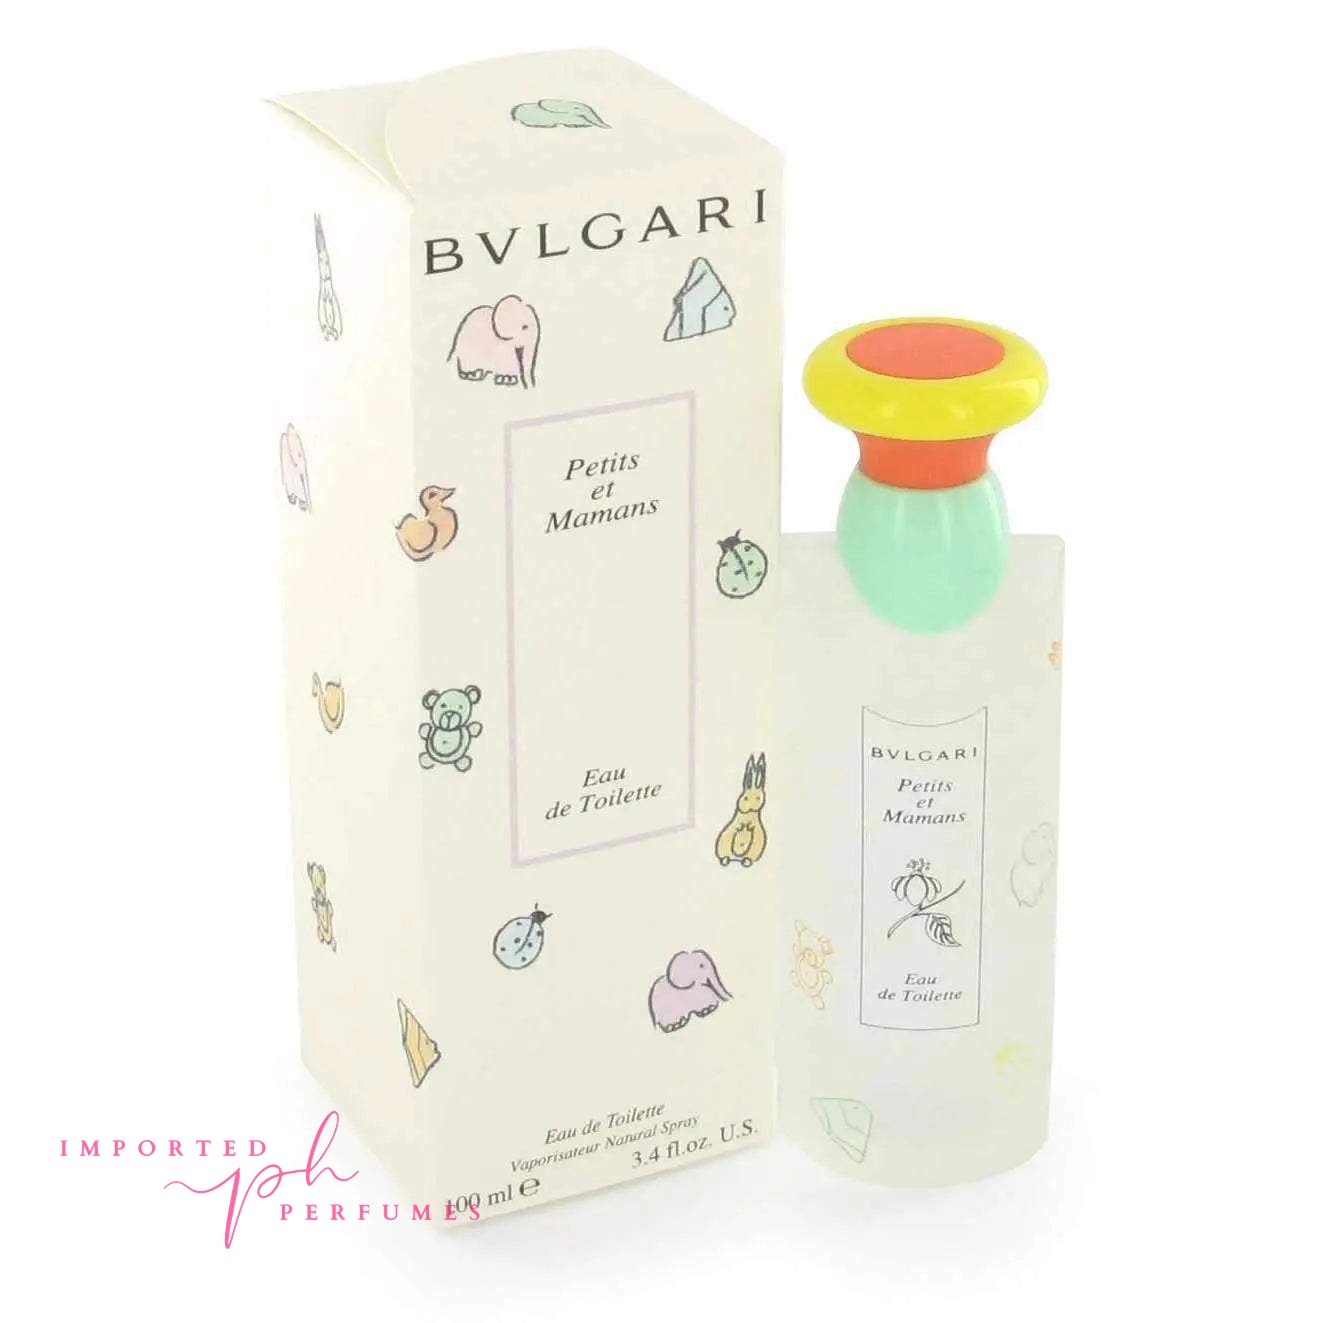 Bvlgari Petits Et Mamans For Women Eau De Toilette 100ml-Imported Perfumes Co-Bvlgari,Bvlgari women,For women,Petit,Petits et Mamans,Women